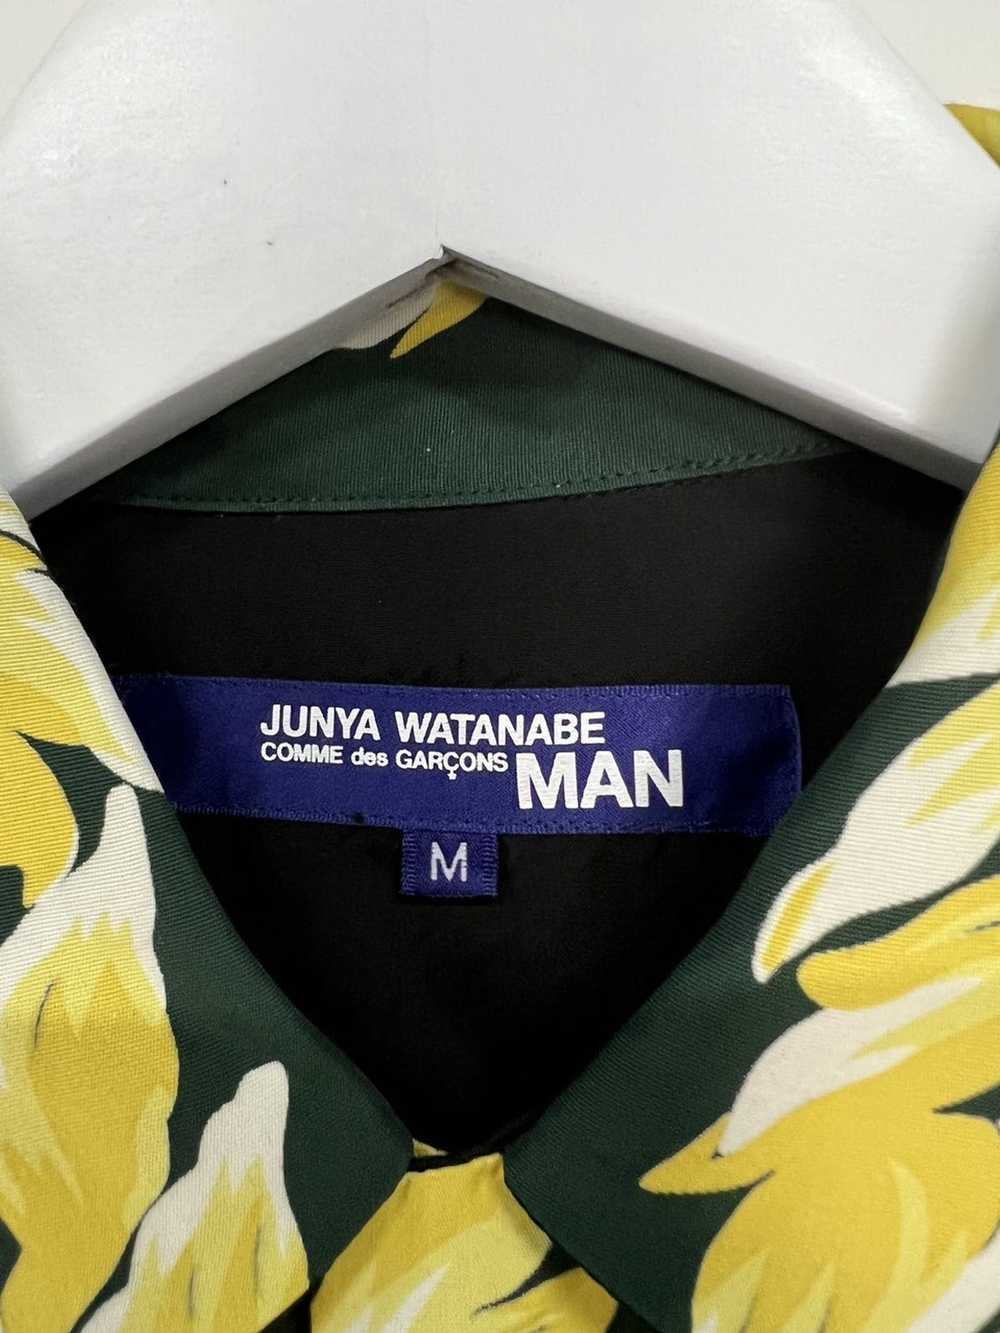 Junya Watanabe Junta Watanabe Man printed shirt - image 3